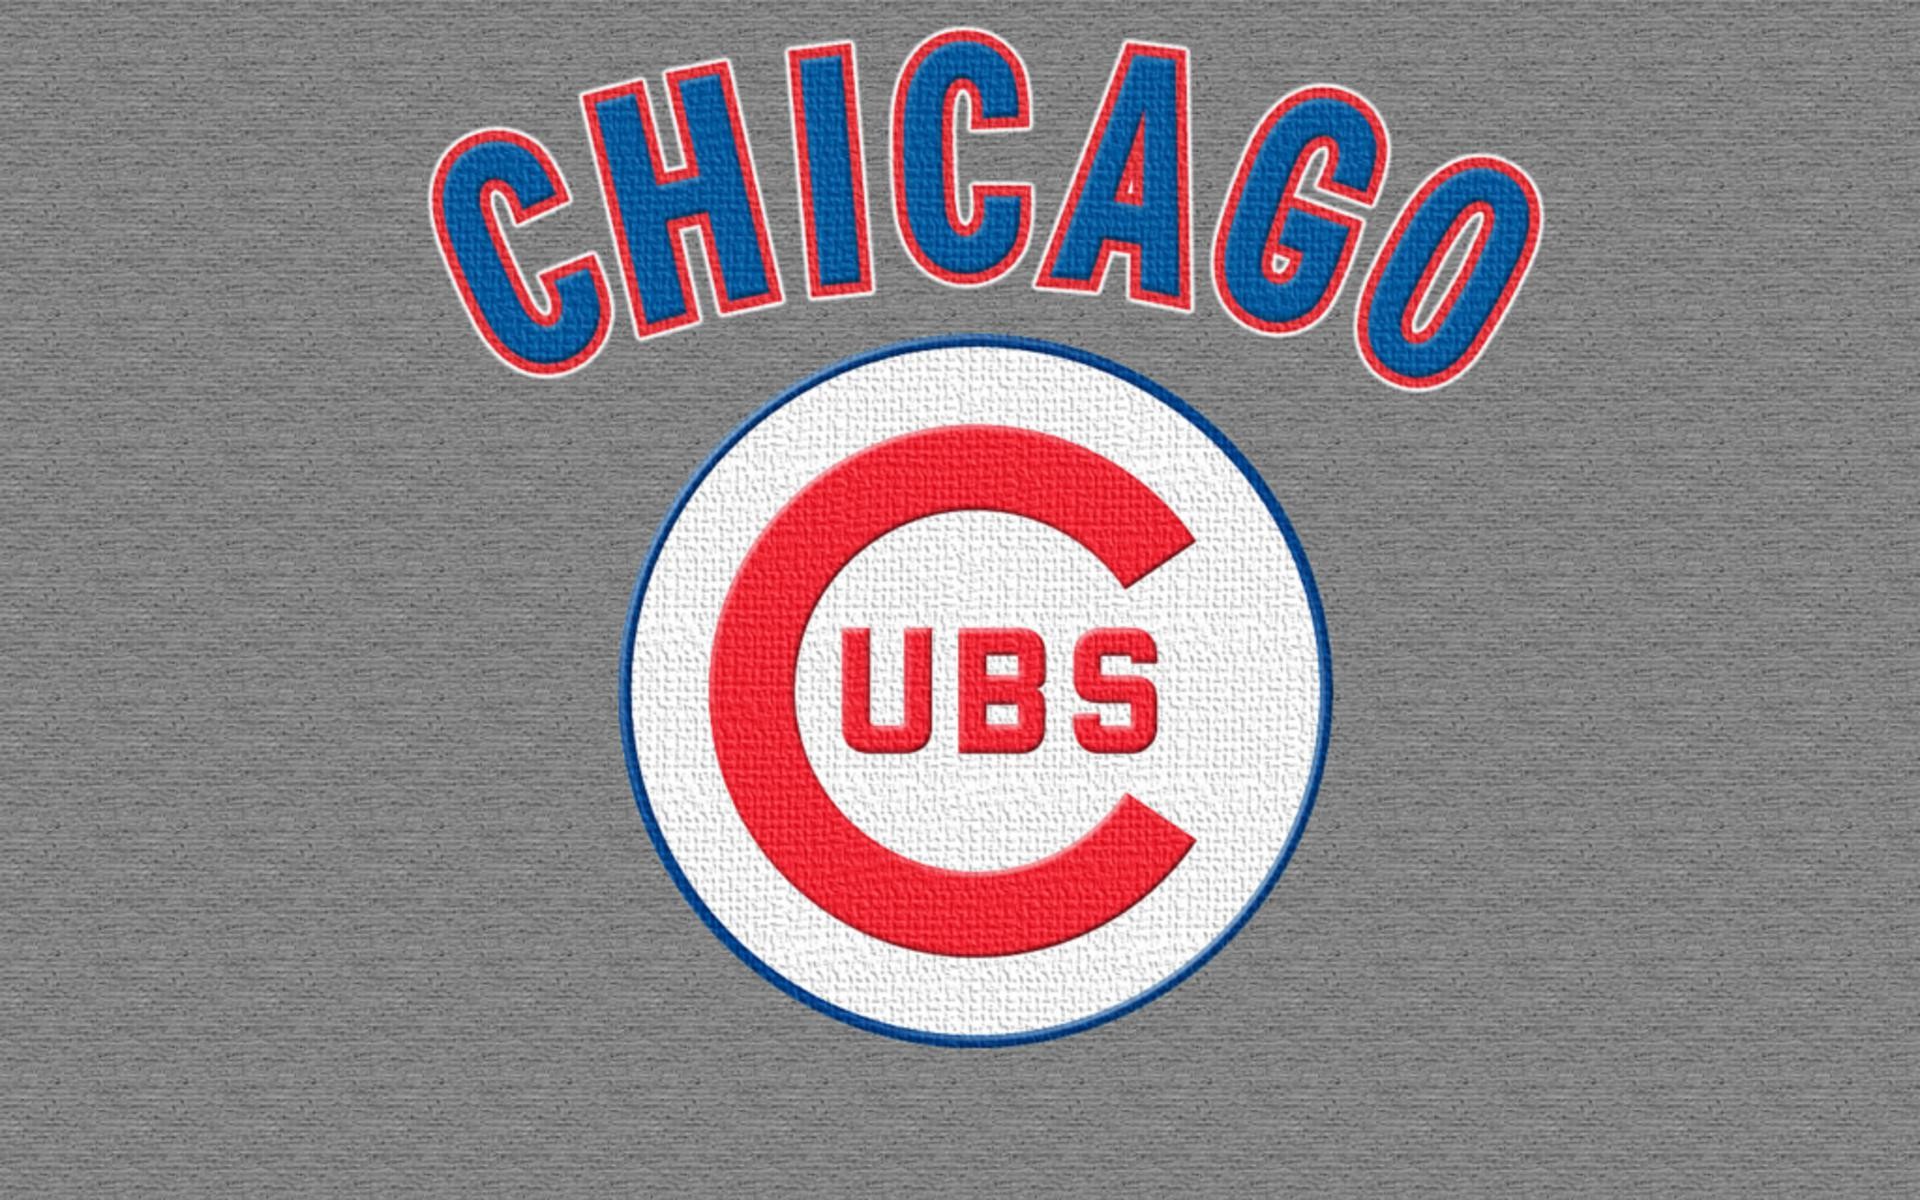 Chicago Cubs World Series wallpaper by Balsavor on DeviantArt